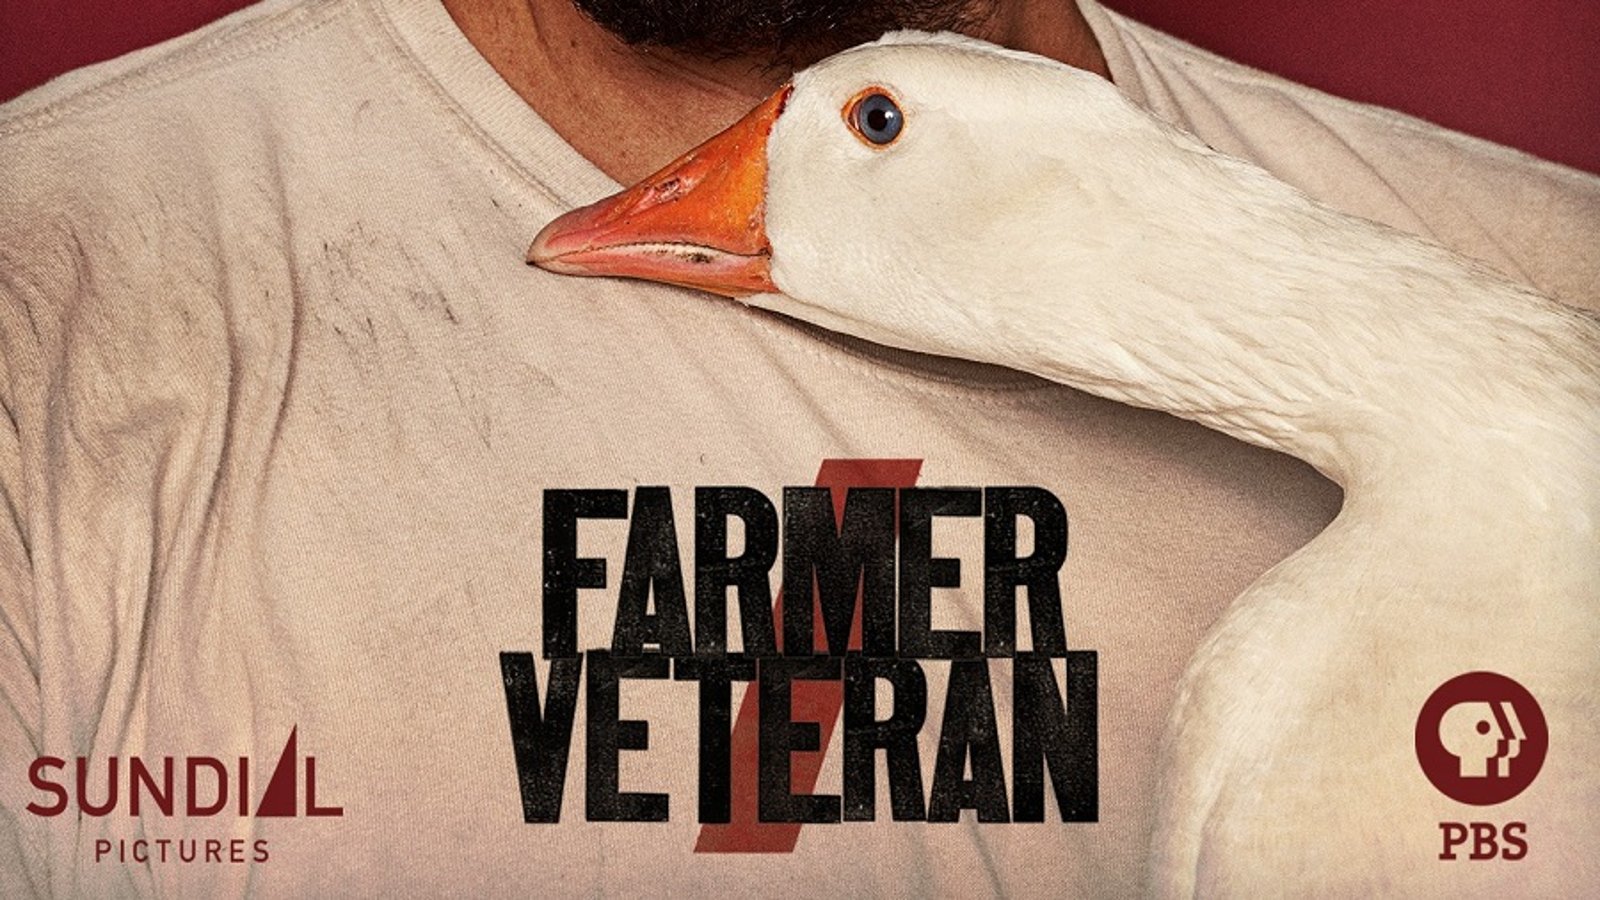 Farmer/Veteran - A Former Soldier's New Life as a Farmer